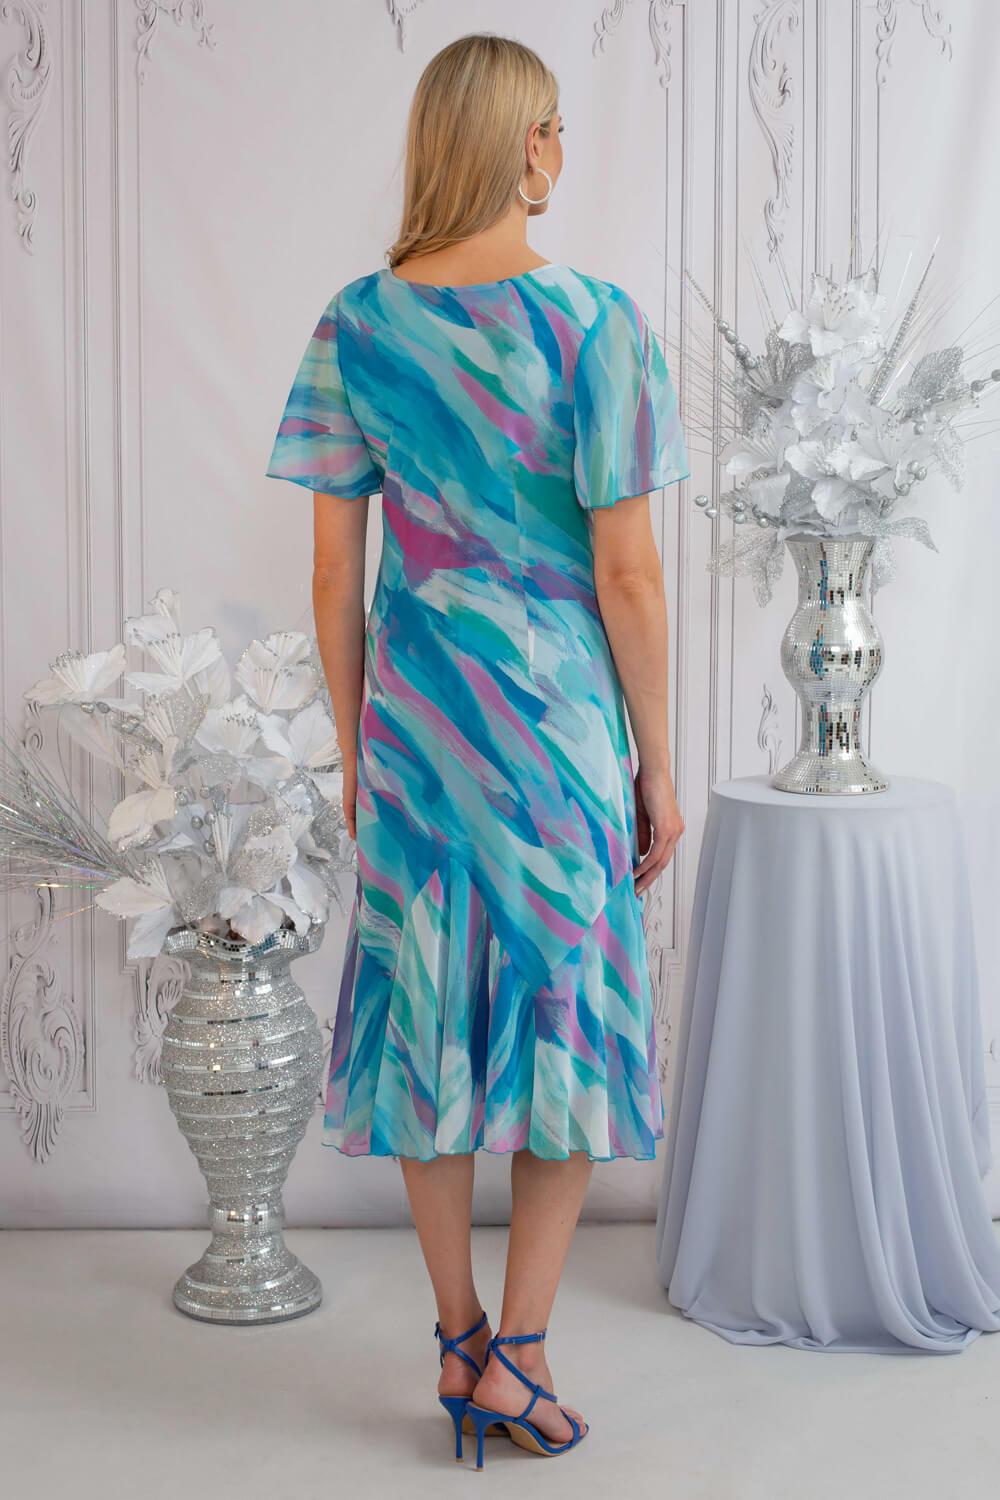 Turquoise Julianna Abstract Print Chiffon Dress, Image 4 of 4